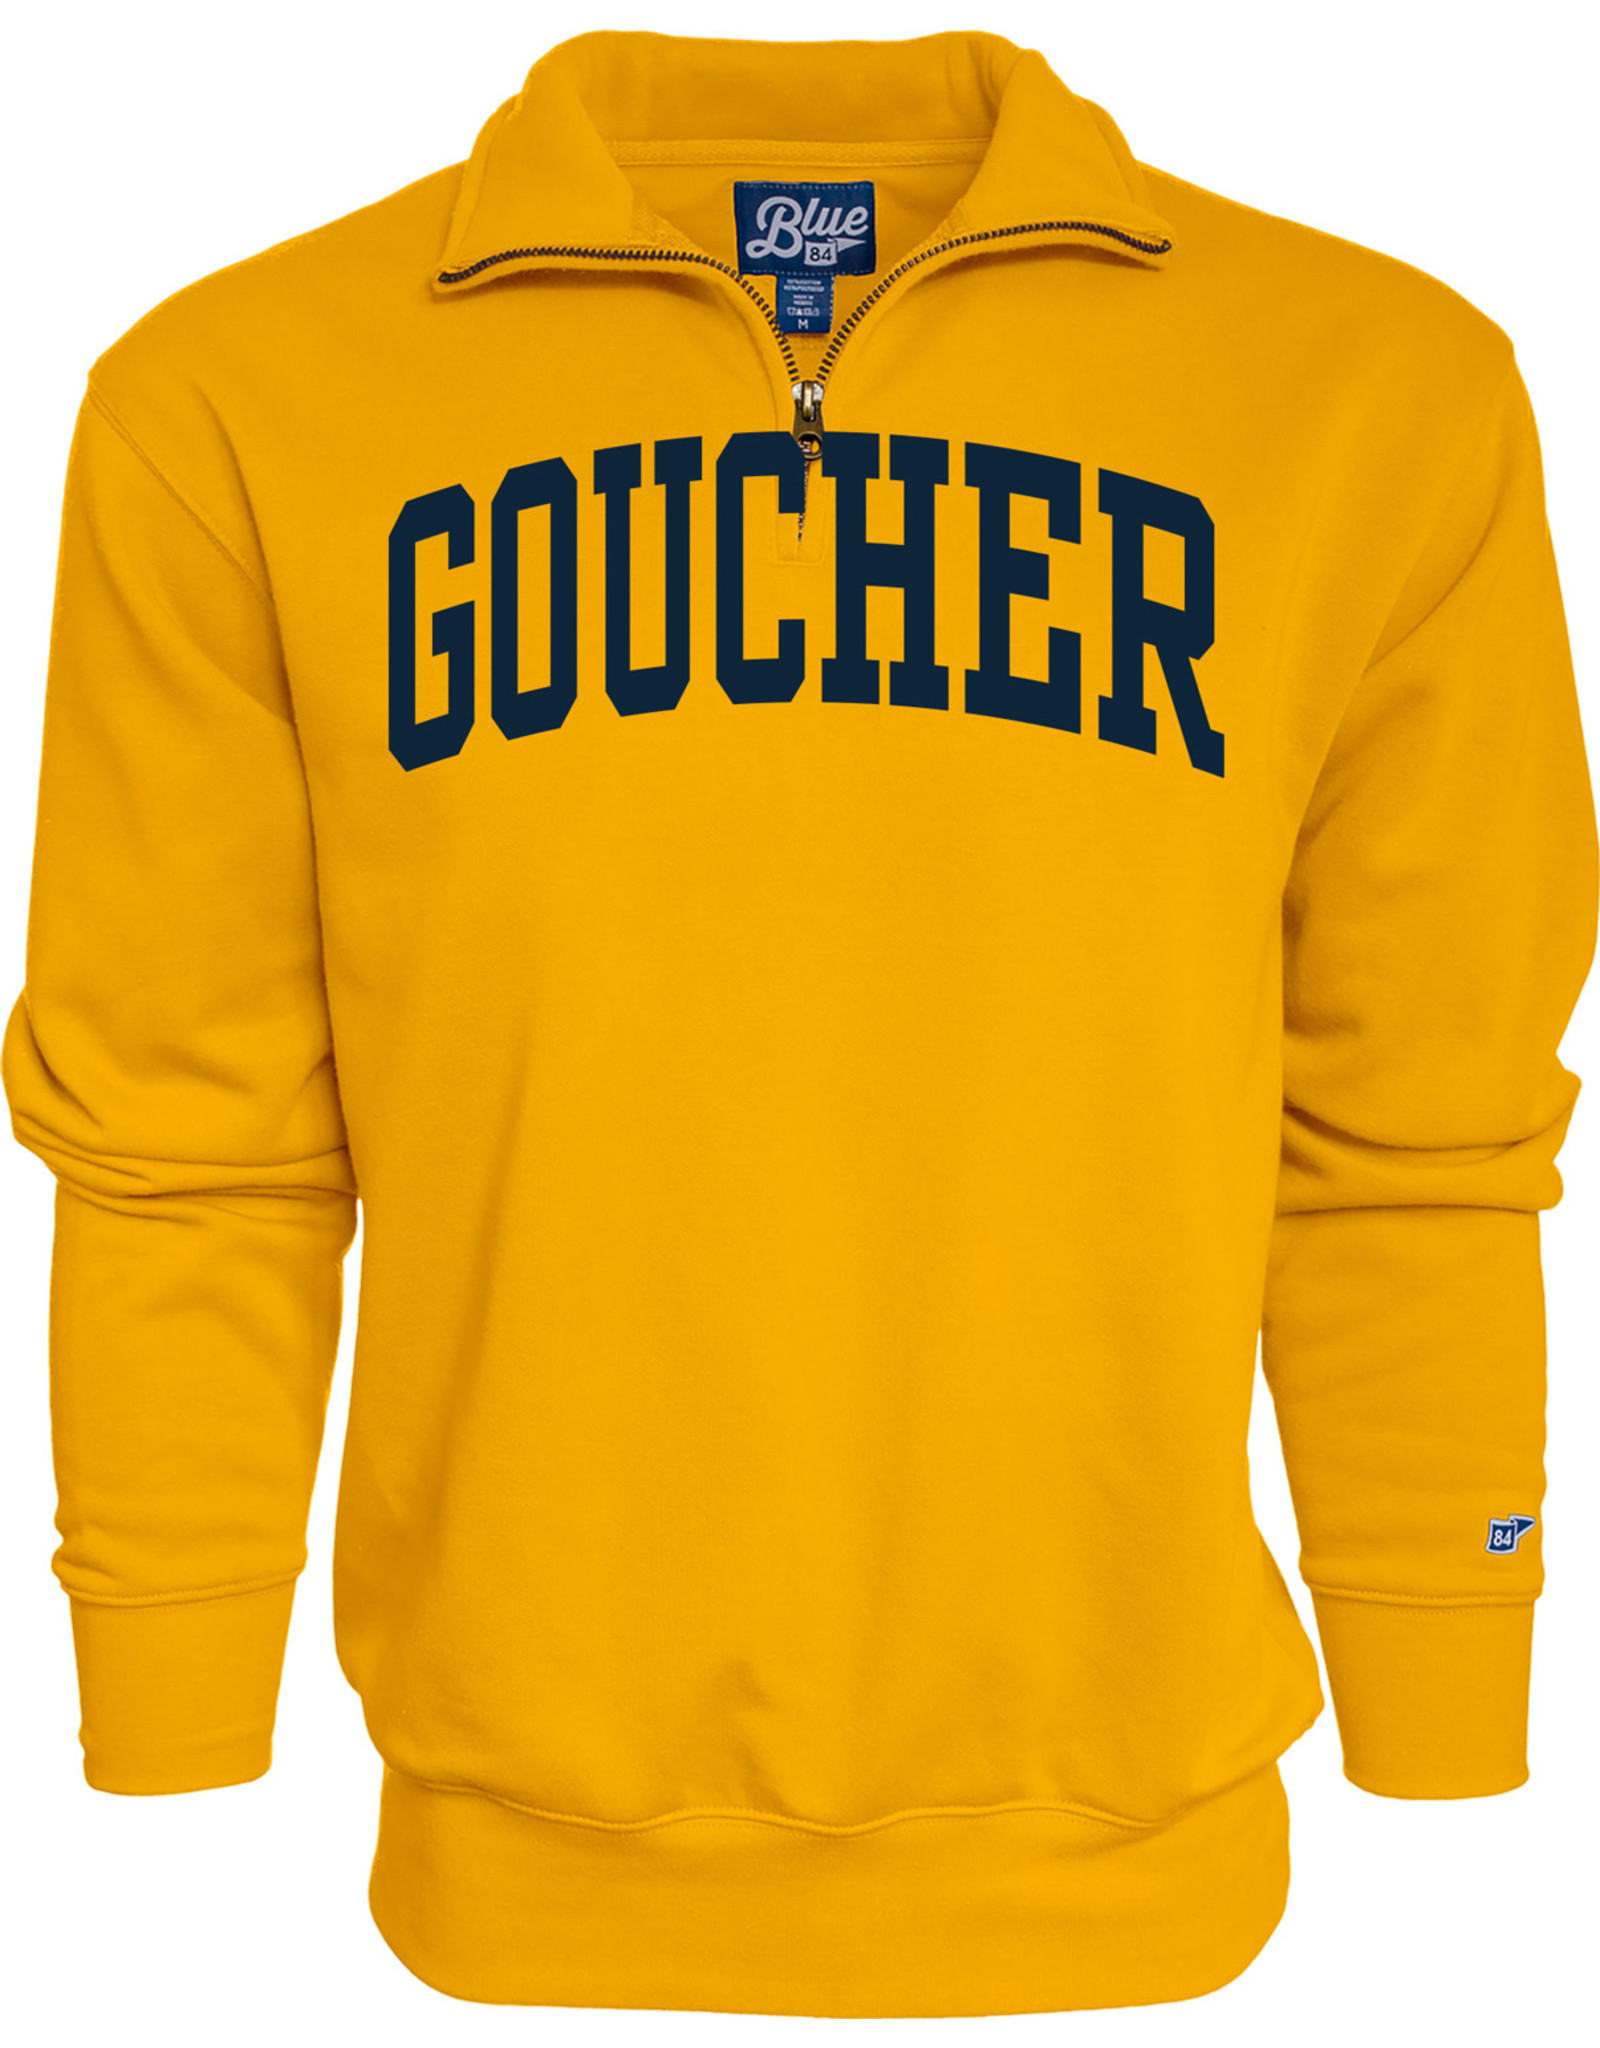 Blue84 Big Detroit 1/4 Zip Sweatshirt "Goucher"